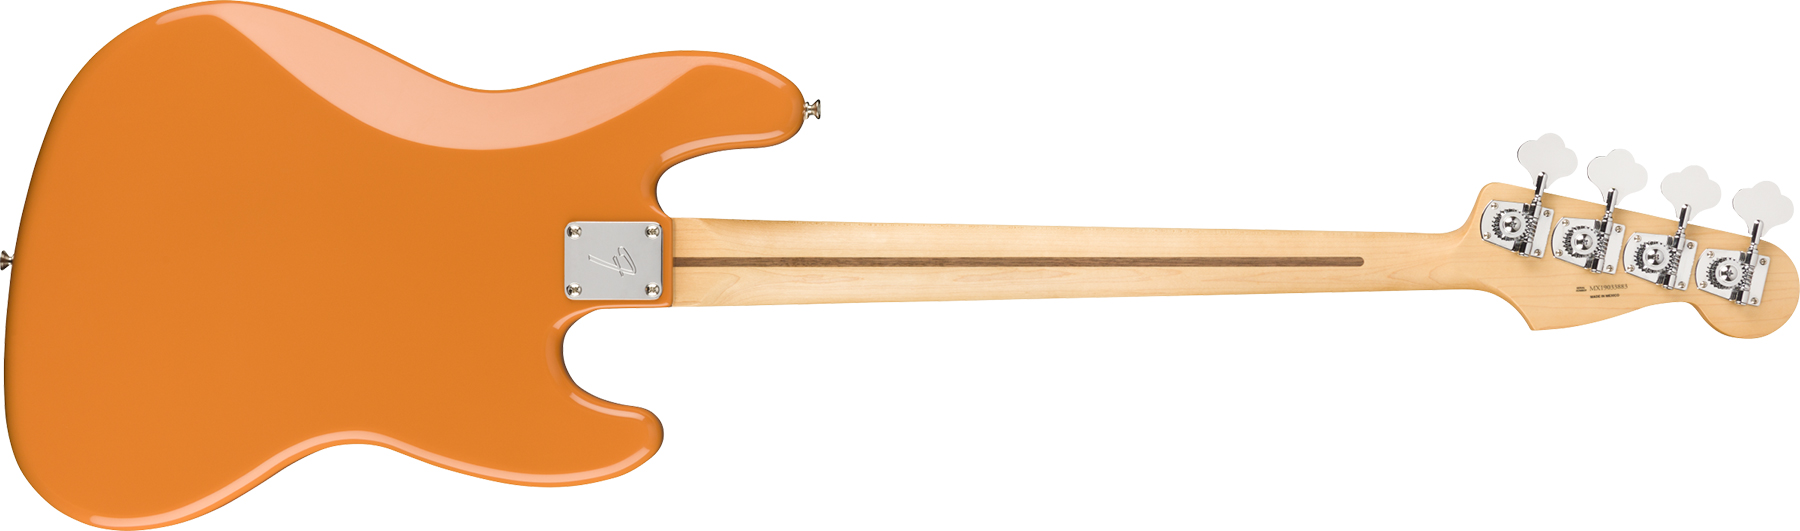 Fender Jazz Bass Player Lh Gaucher Mex Pf - Capri Orange - Solid body electric bass - Variation 1